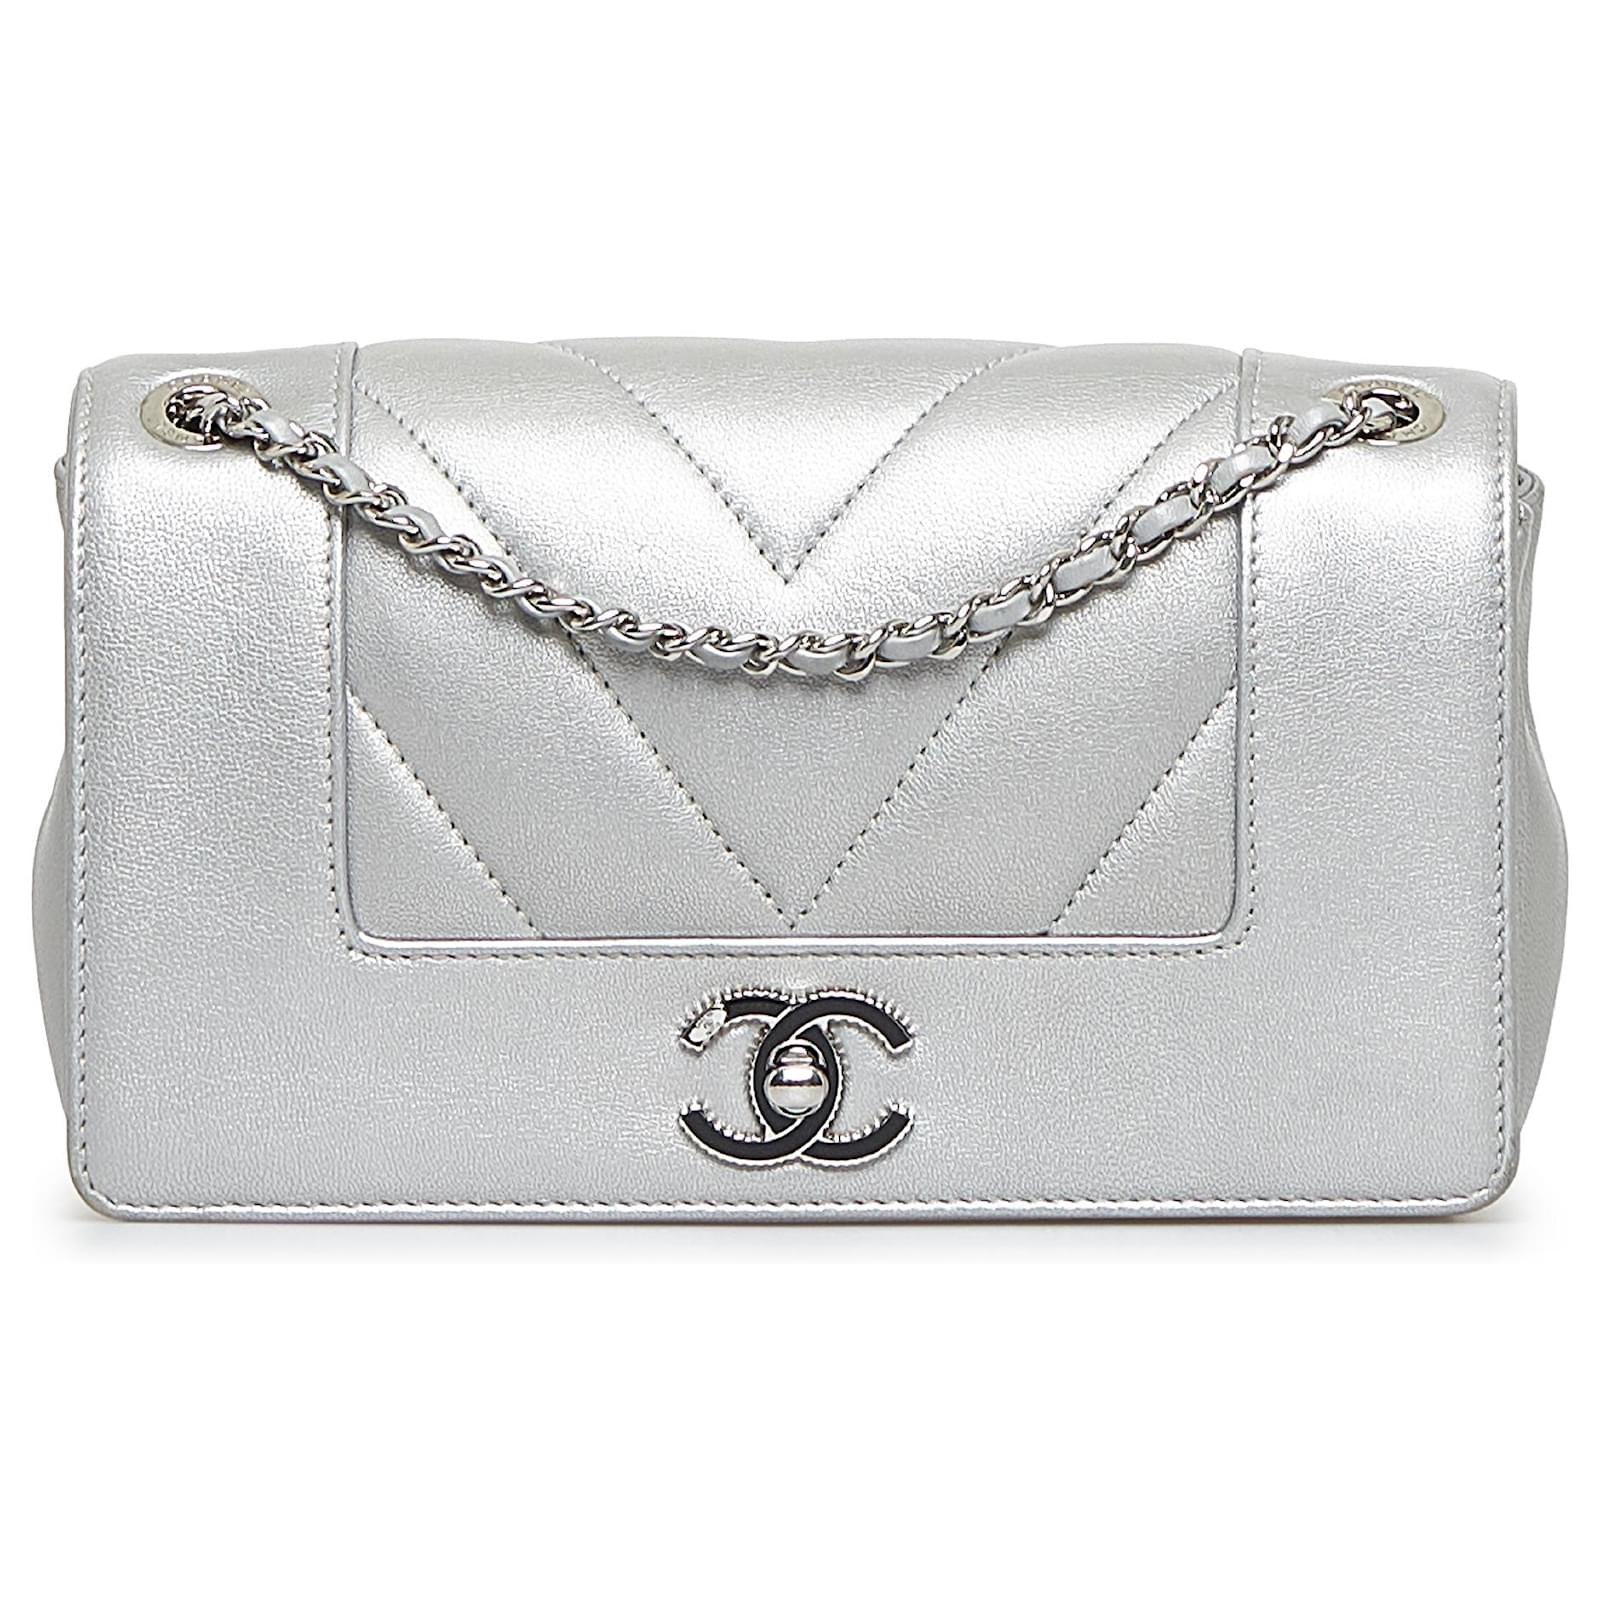 Authentic Chanel Mademoiselle Vintage WOC Bag